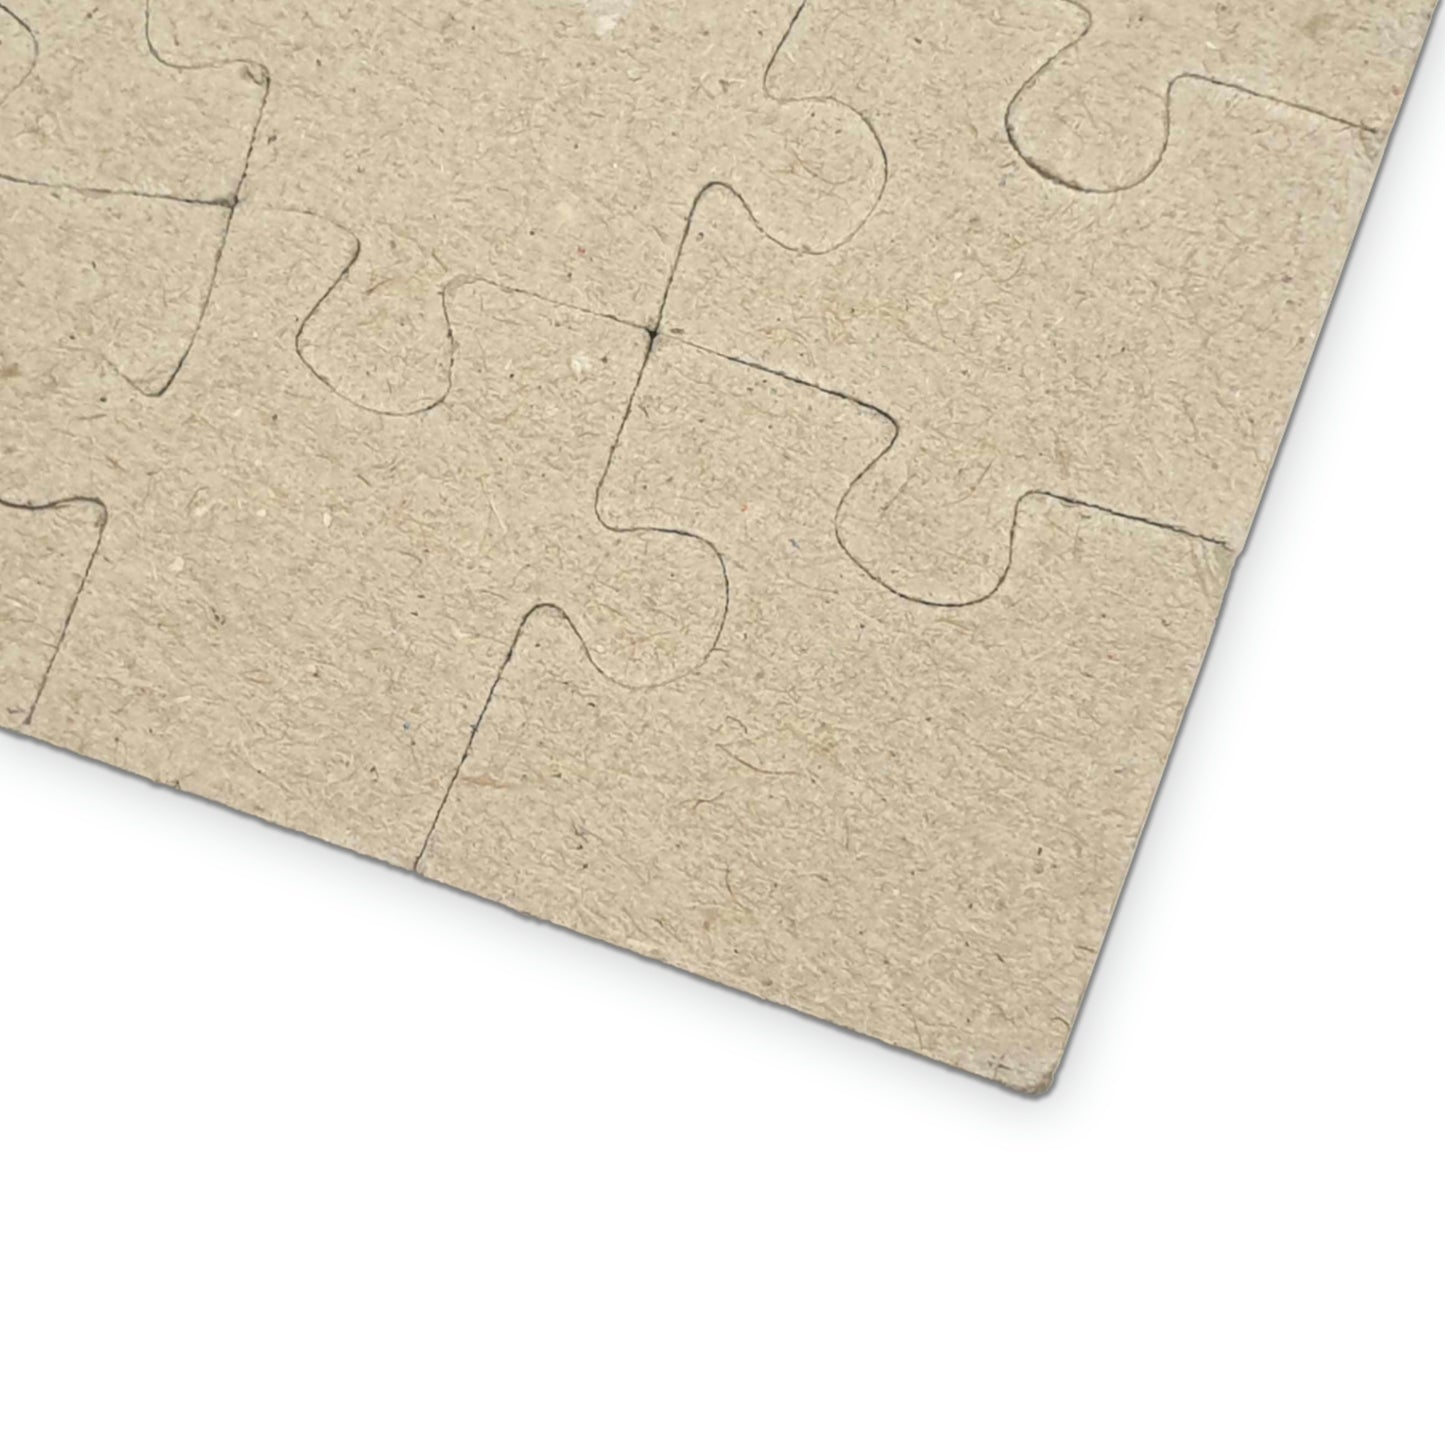 The Shield Of Soren - 1000 Piece Jigsaw Puzzle